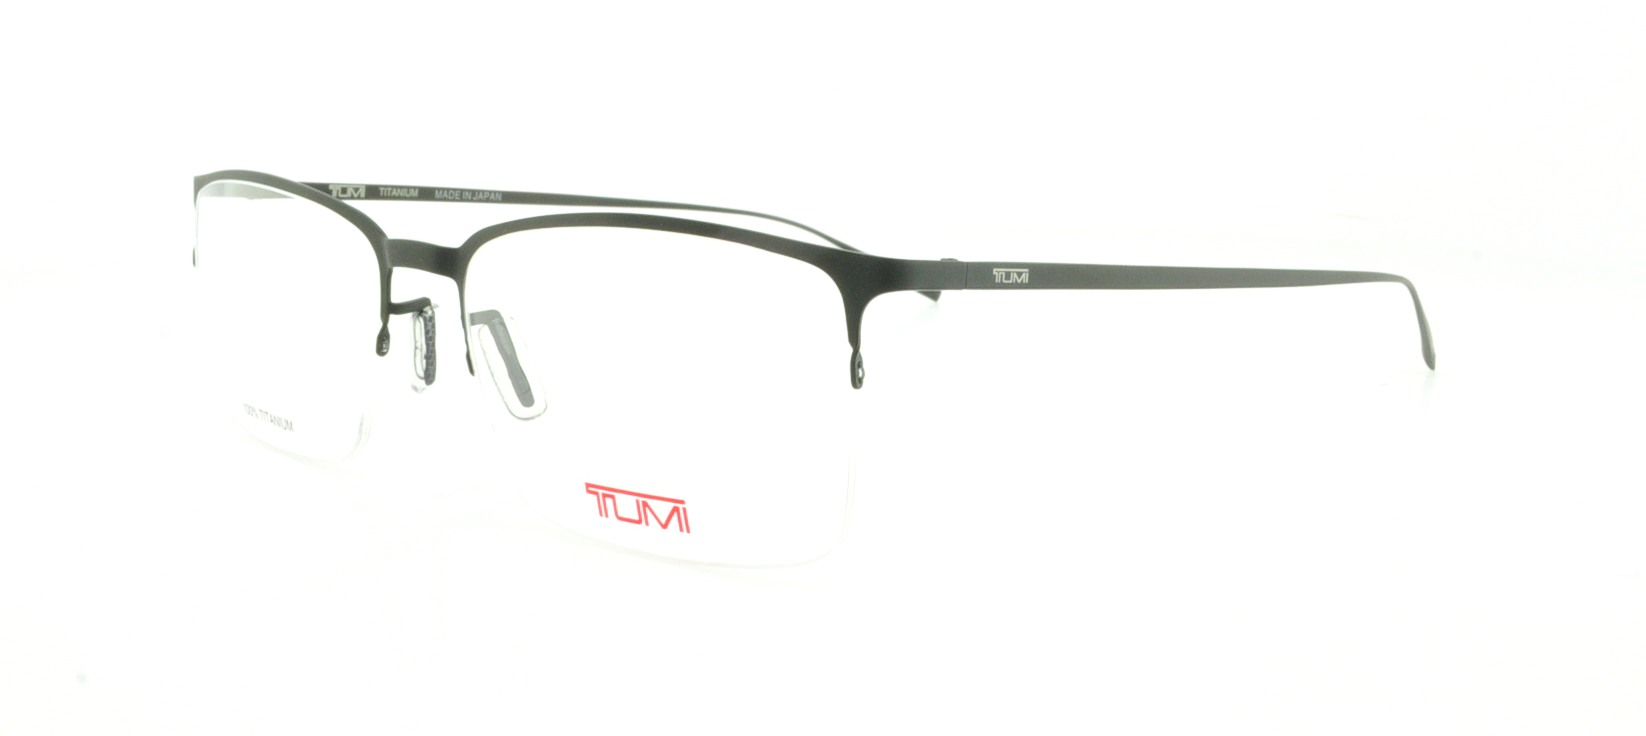 Picture of Tumi Eyeglasses T113